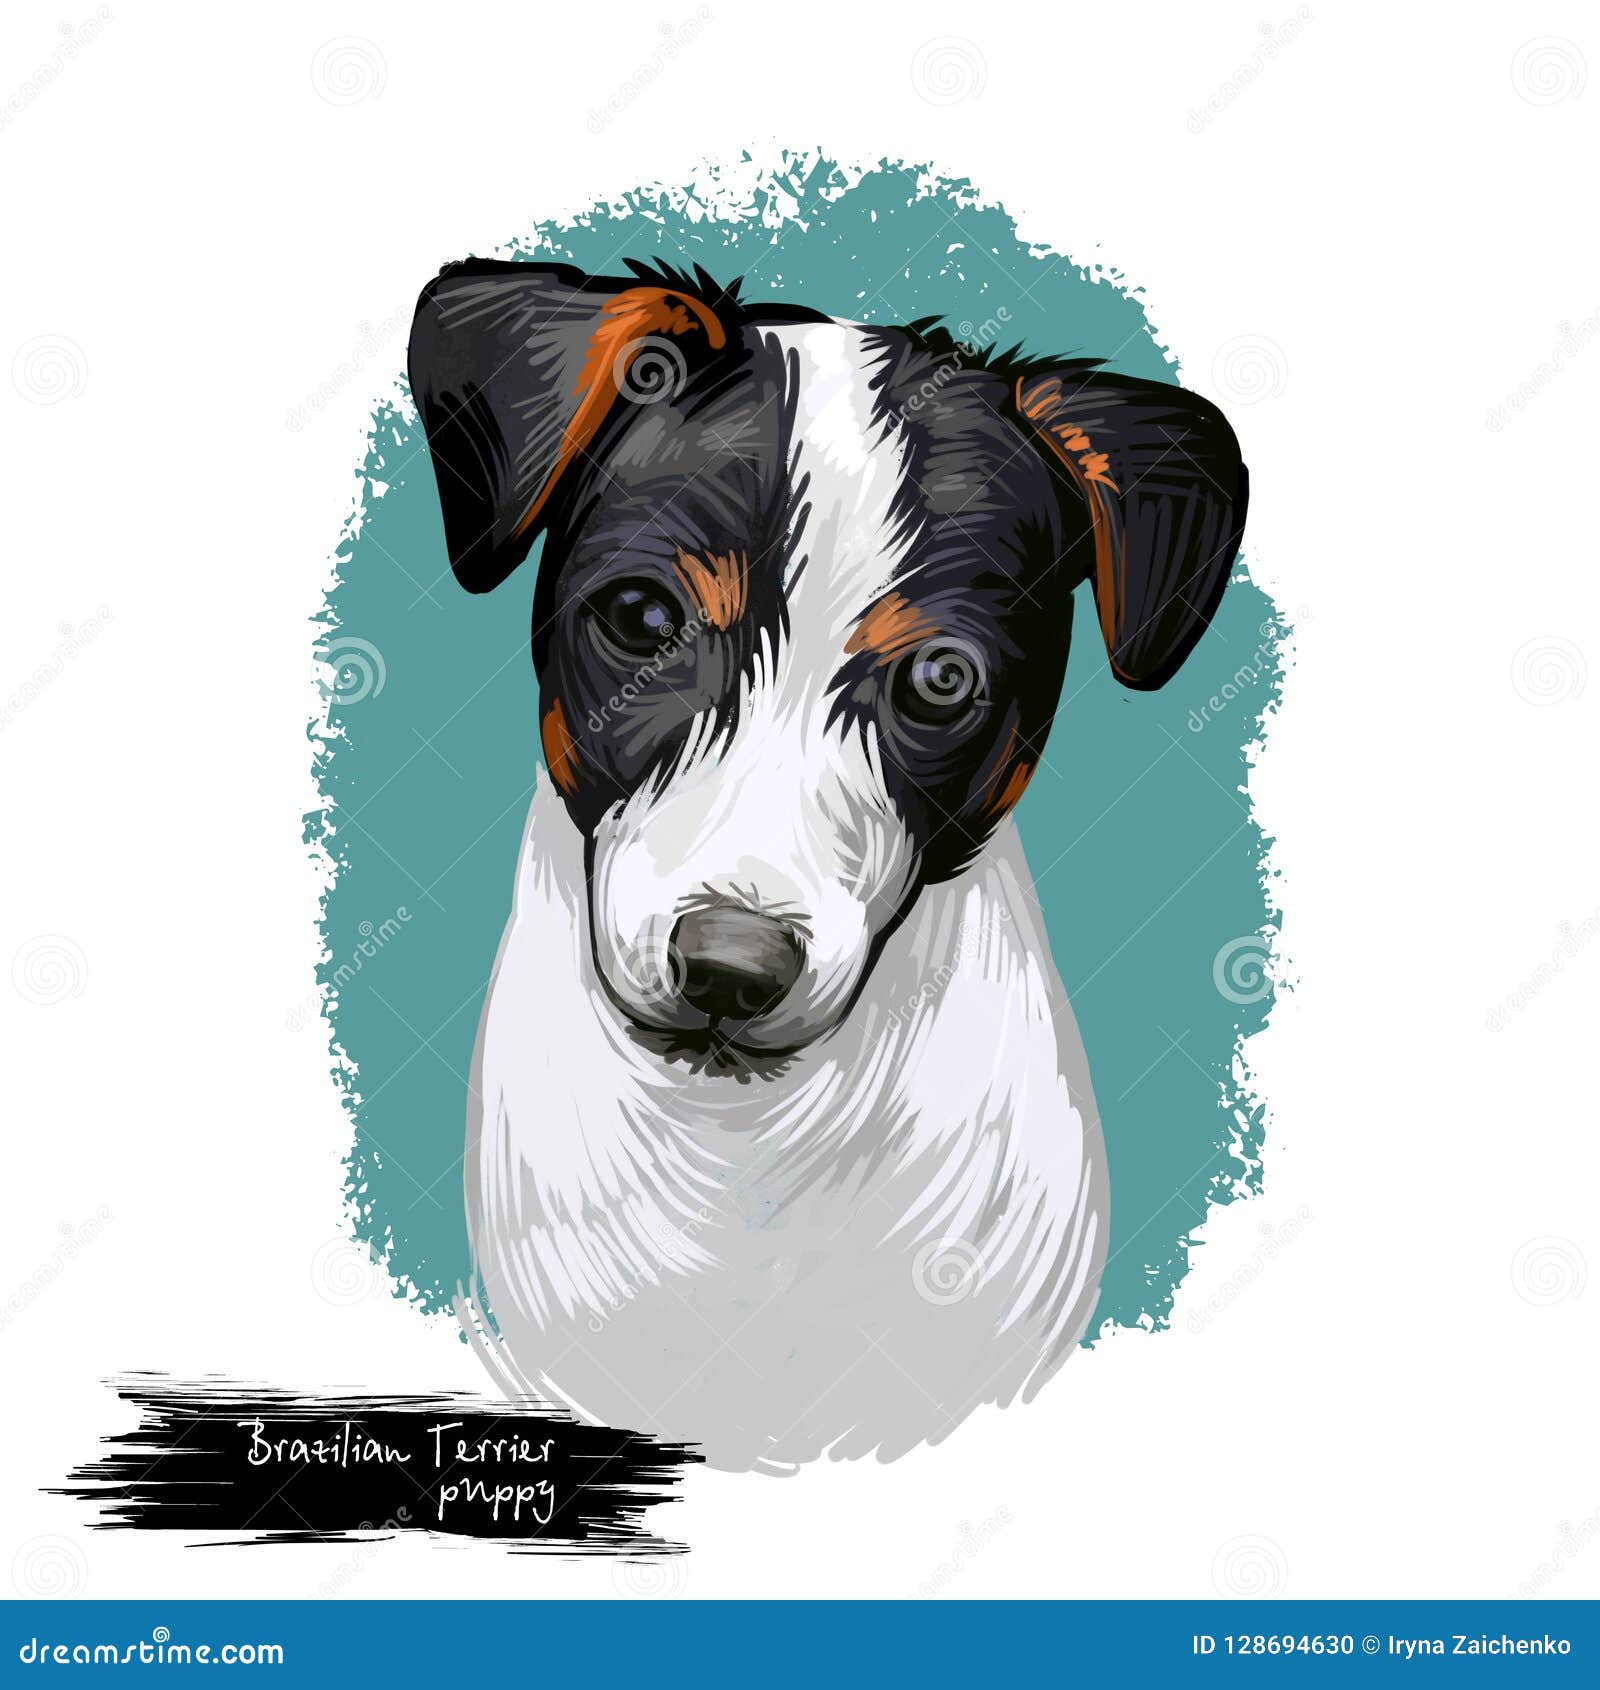 Brazilian Terrierbraque Saint Germain Puppy Dog Breed Digital Art Illustration Isolated On White Popular Pup Portrait Stock Illustration Illustration Of Background Cheerful 128694630